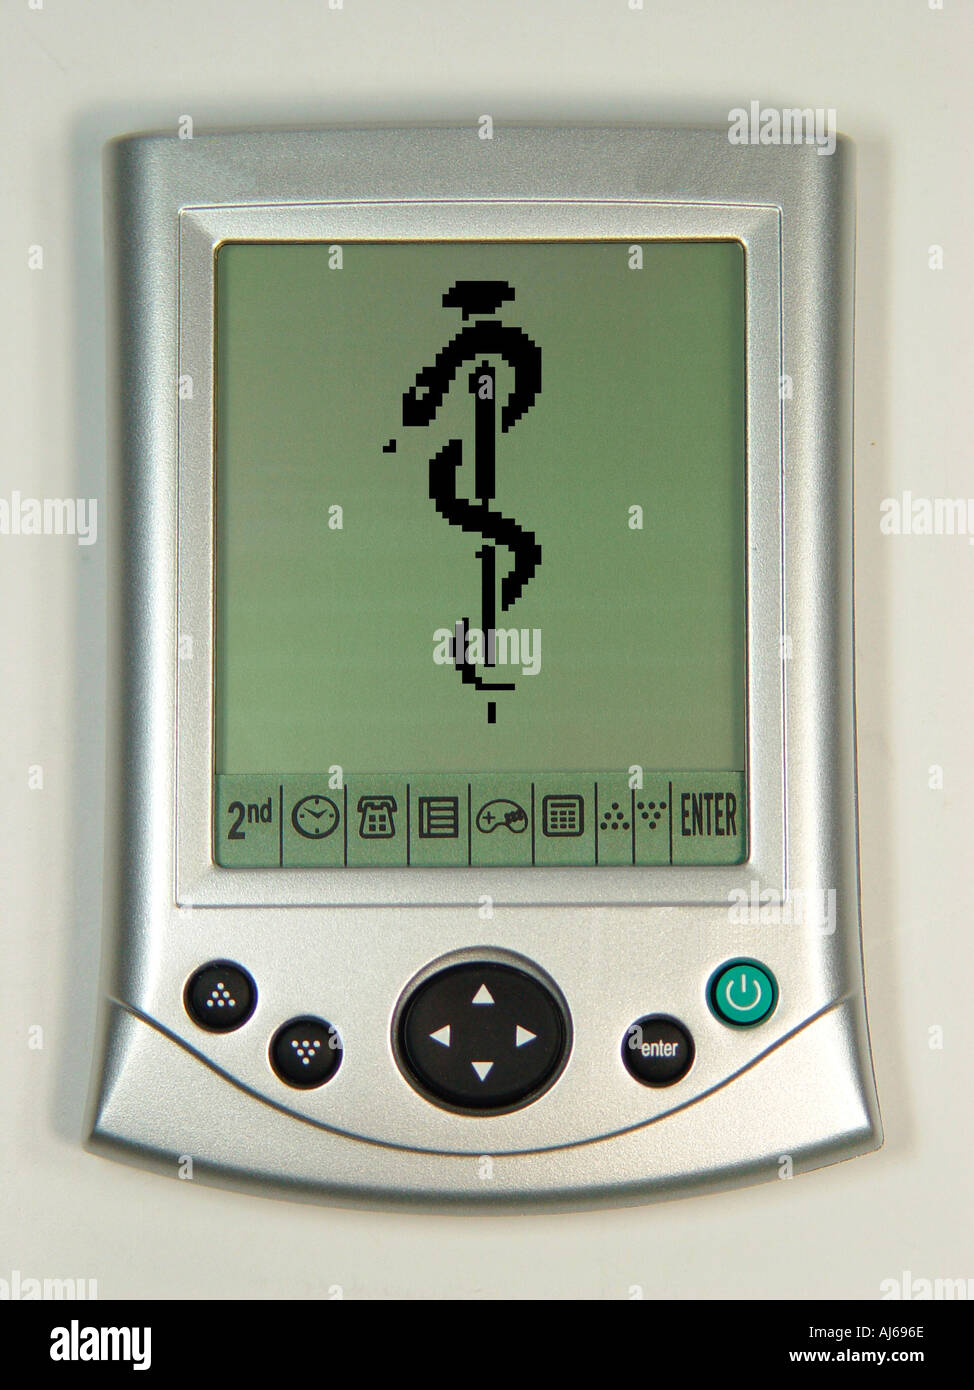 PDA simbolo als fuer moderne medizinische Anwendungen Foto Stock